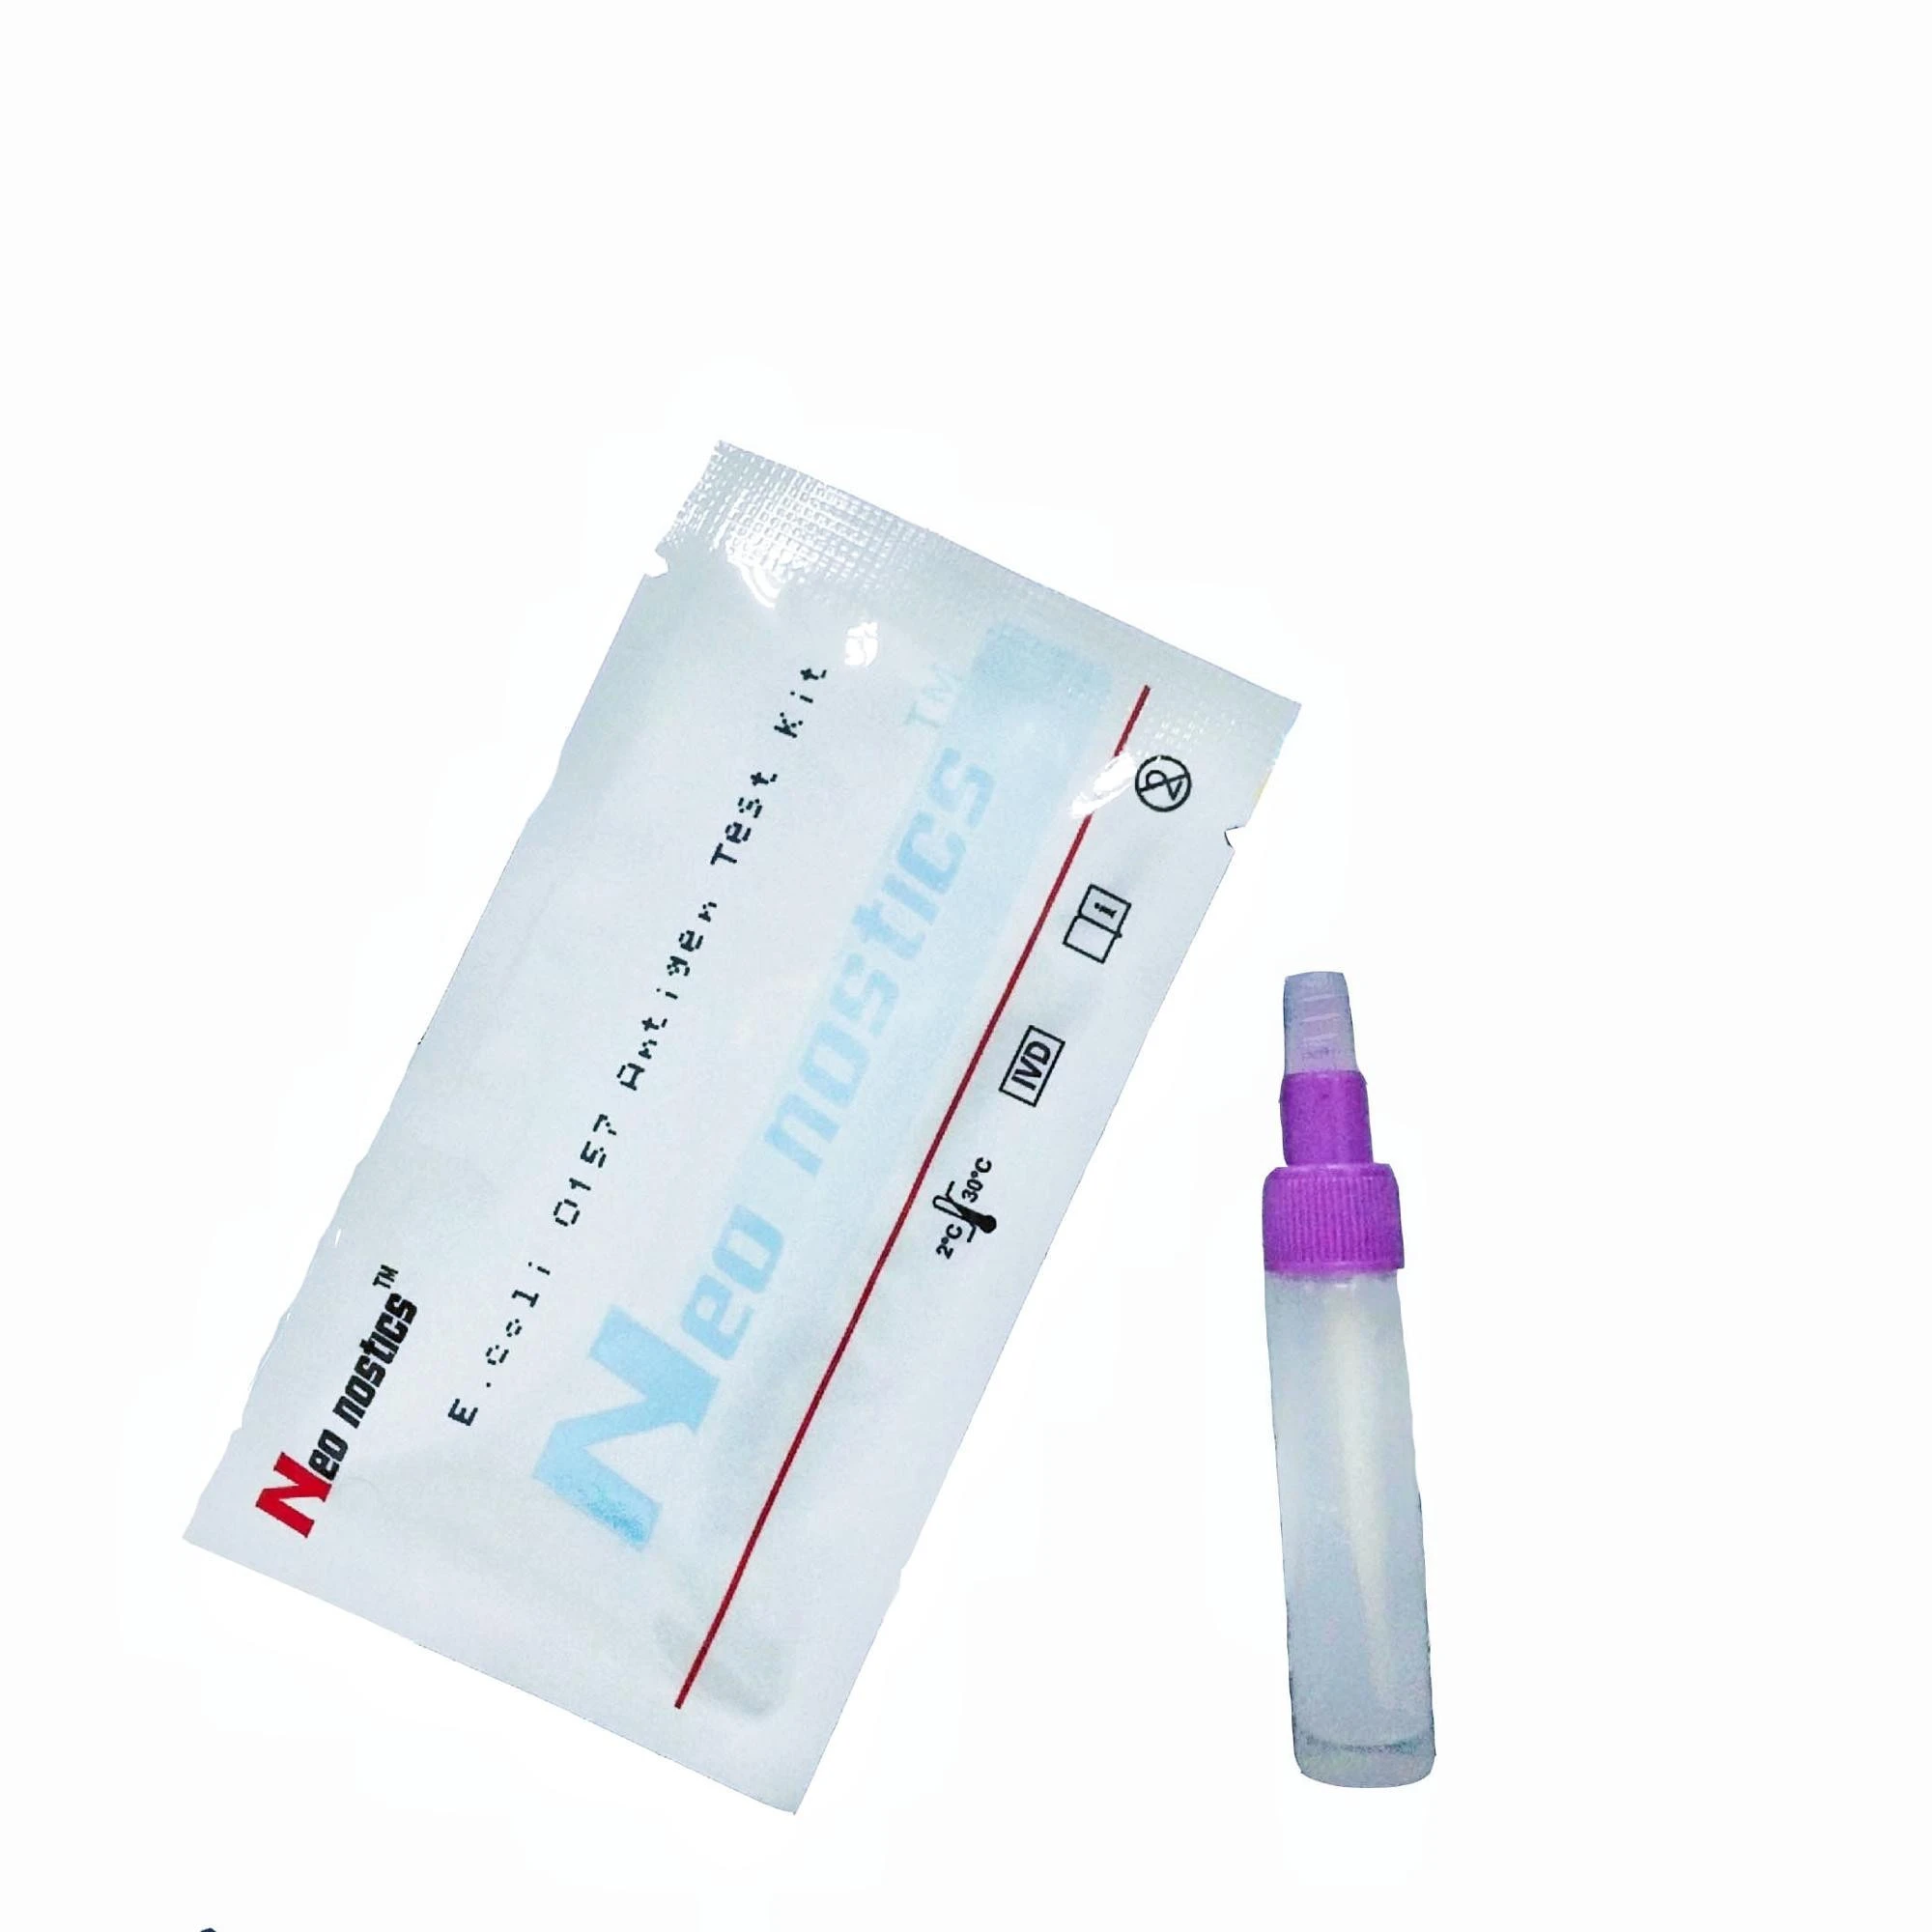 Escherichia coli O157 Antigen  Rapid stool Test Kit